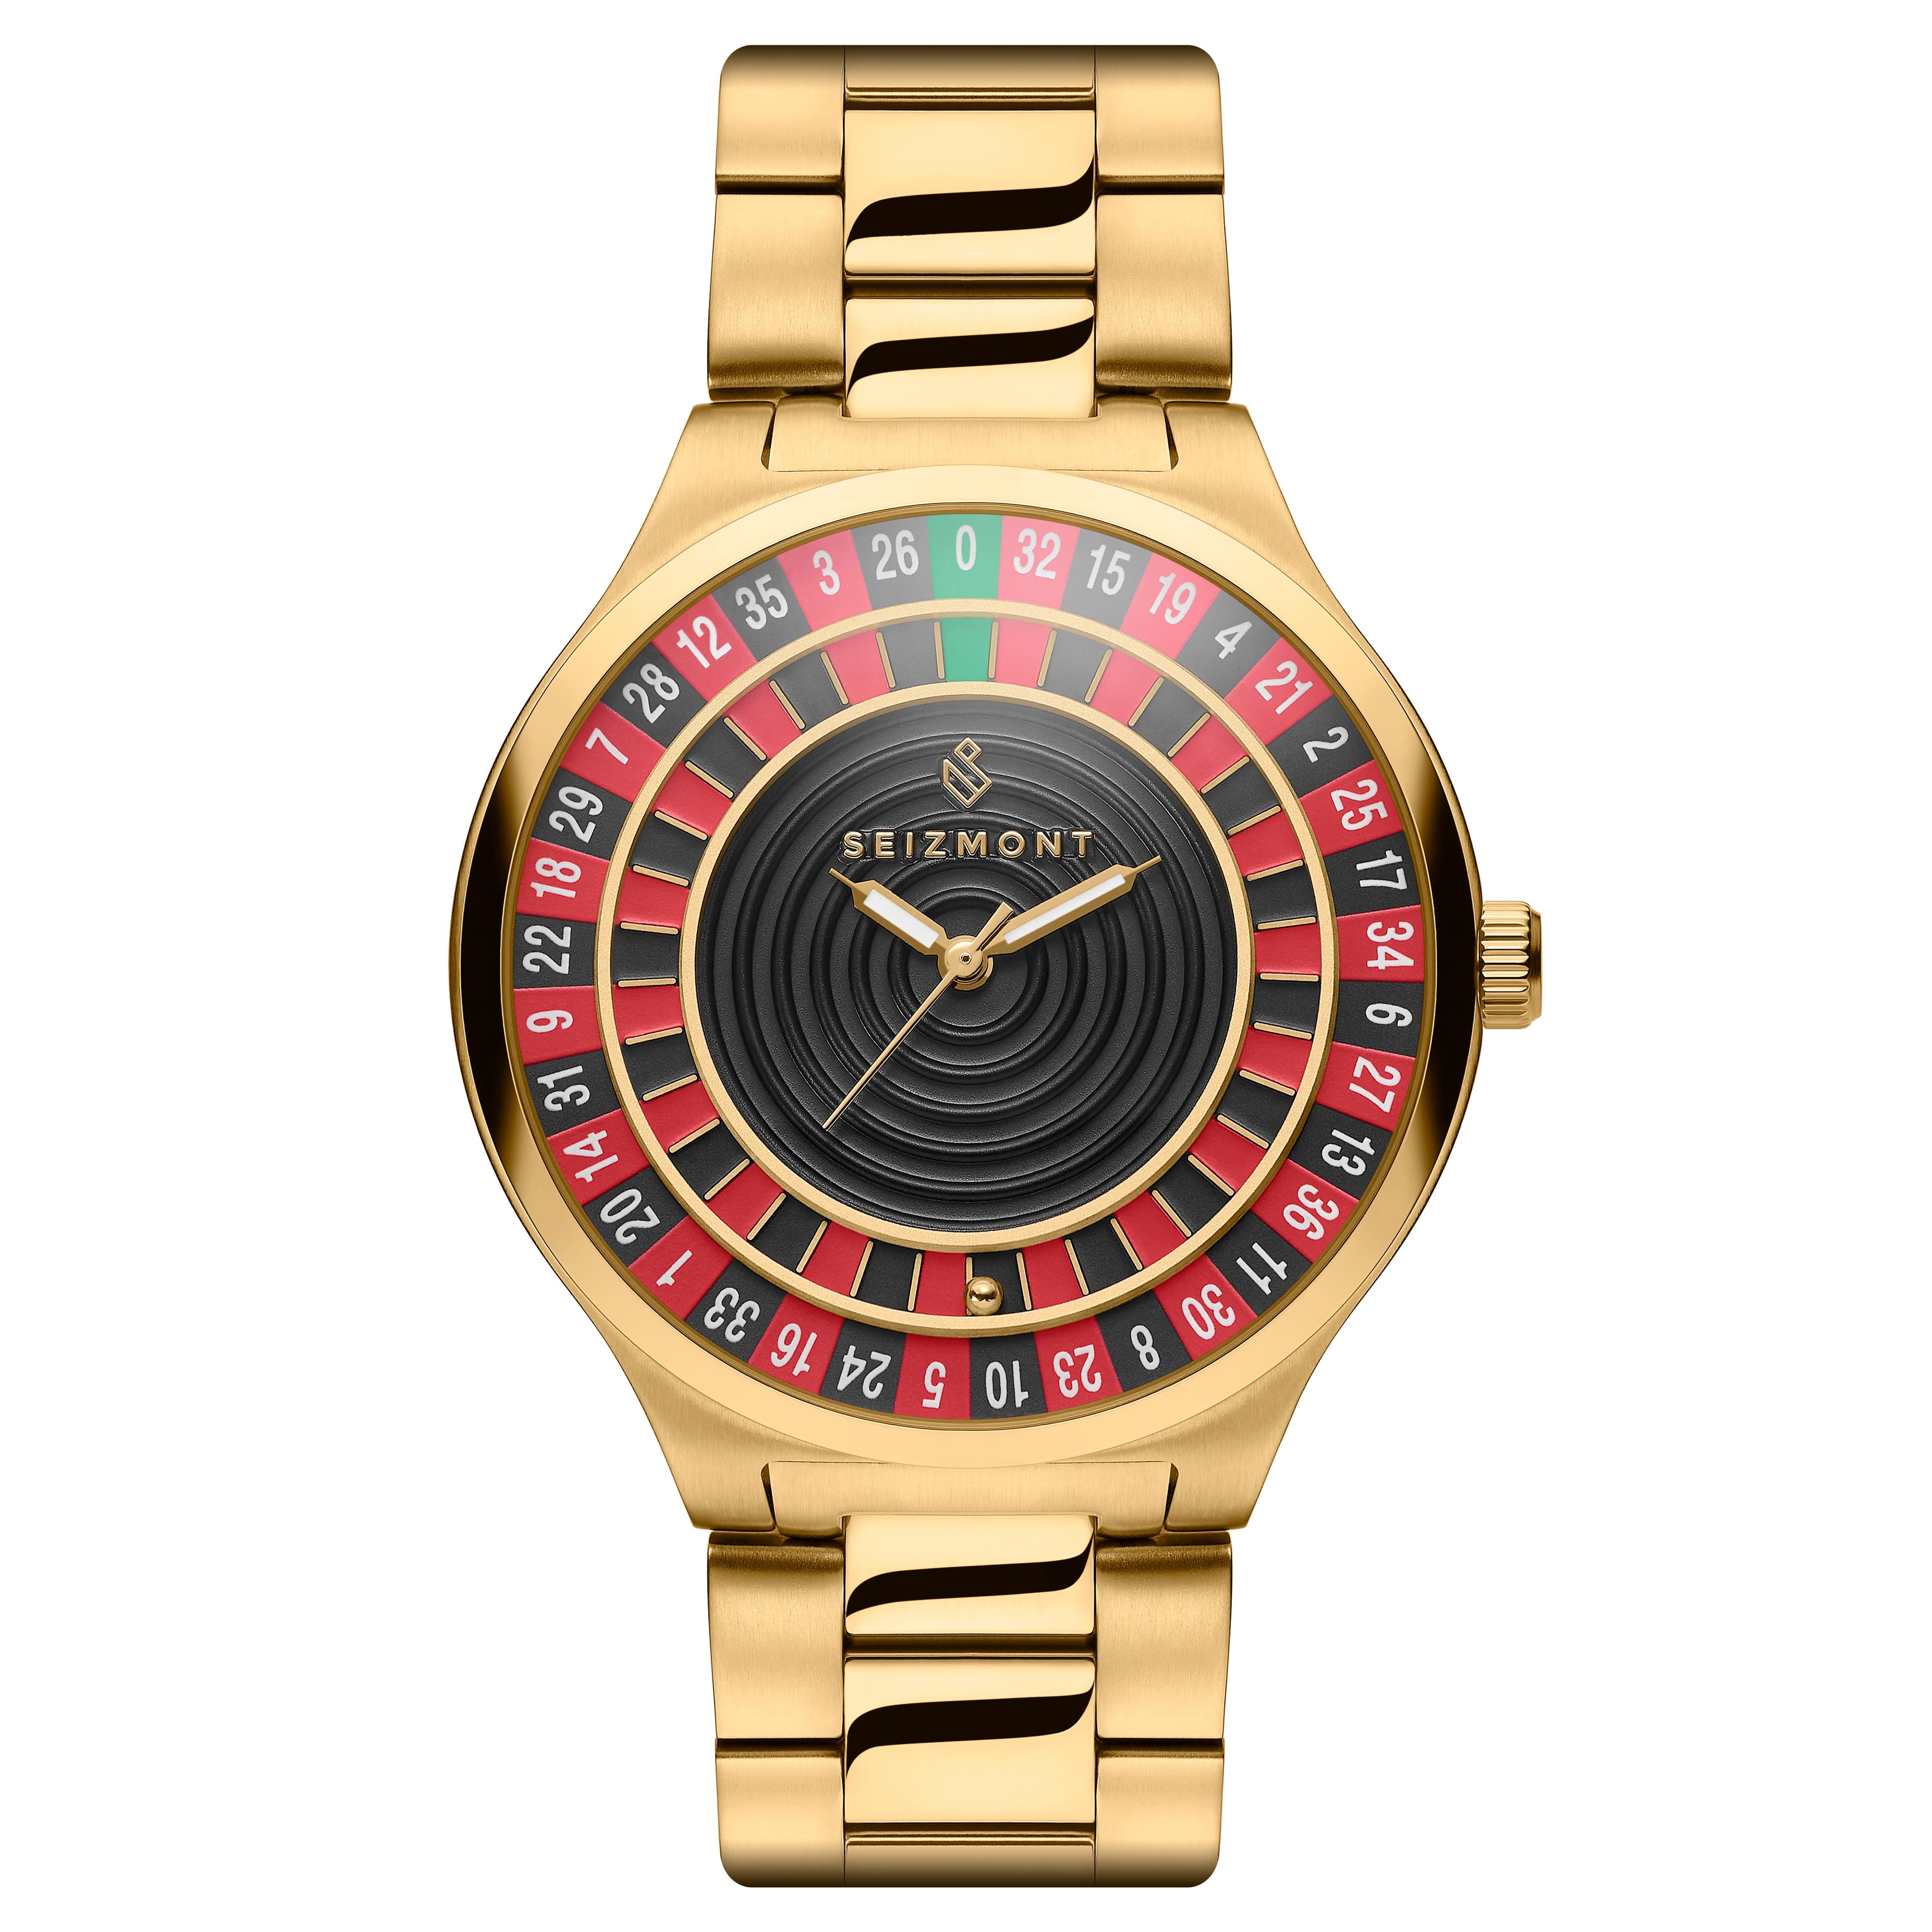 Ace | Goldfarbene Roulette-Uhr aus Edelstahl